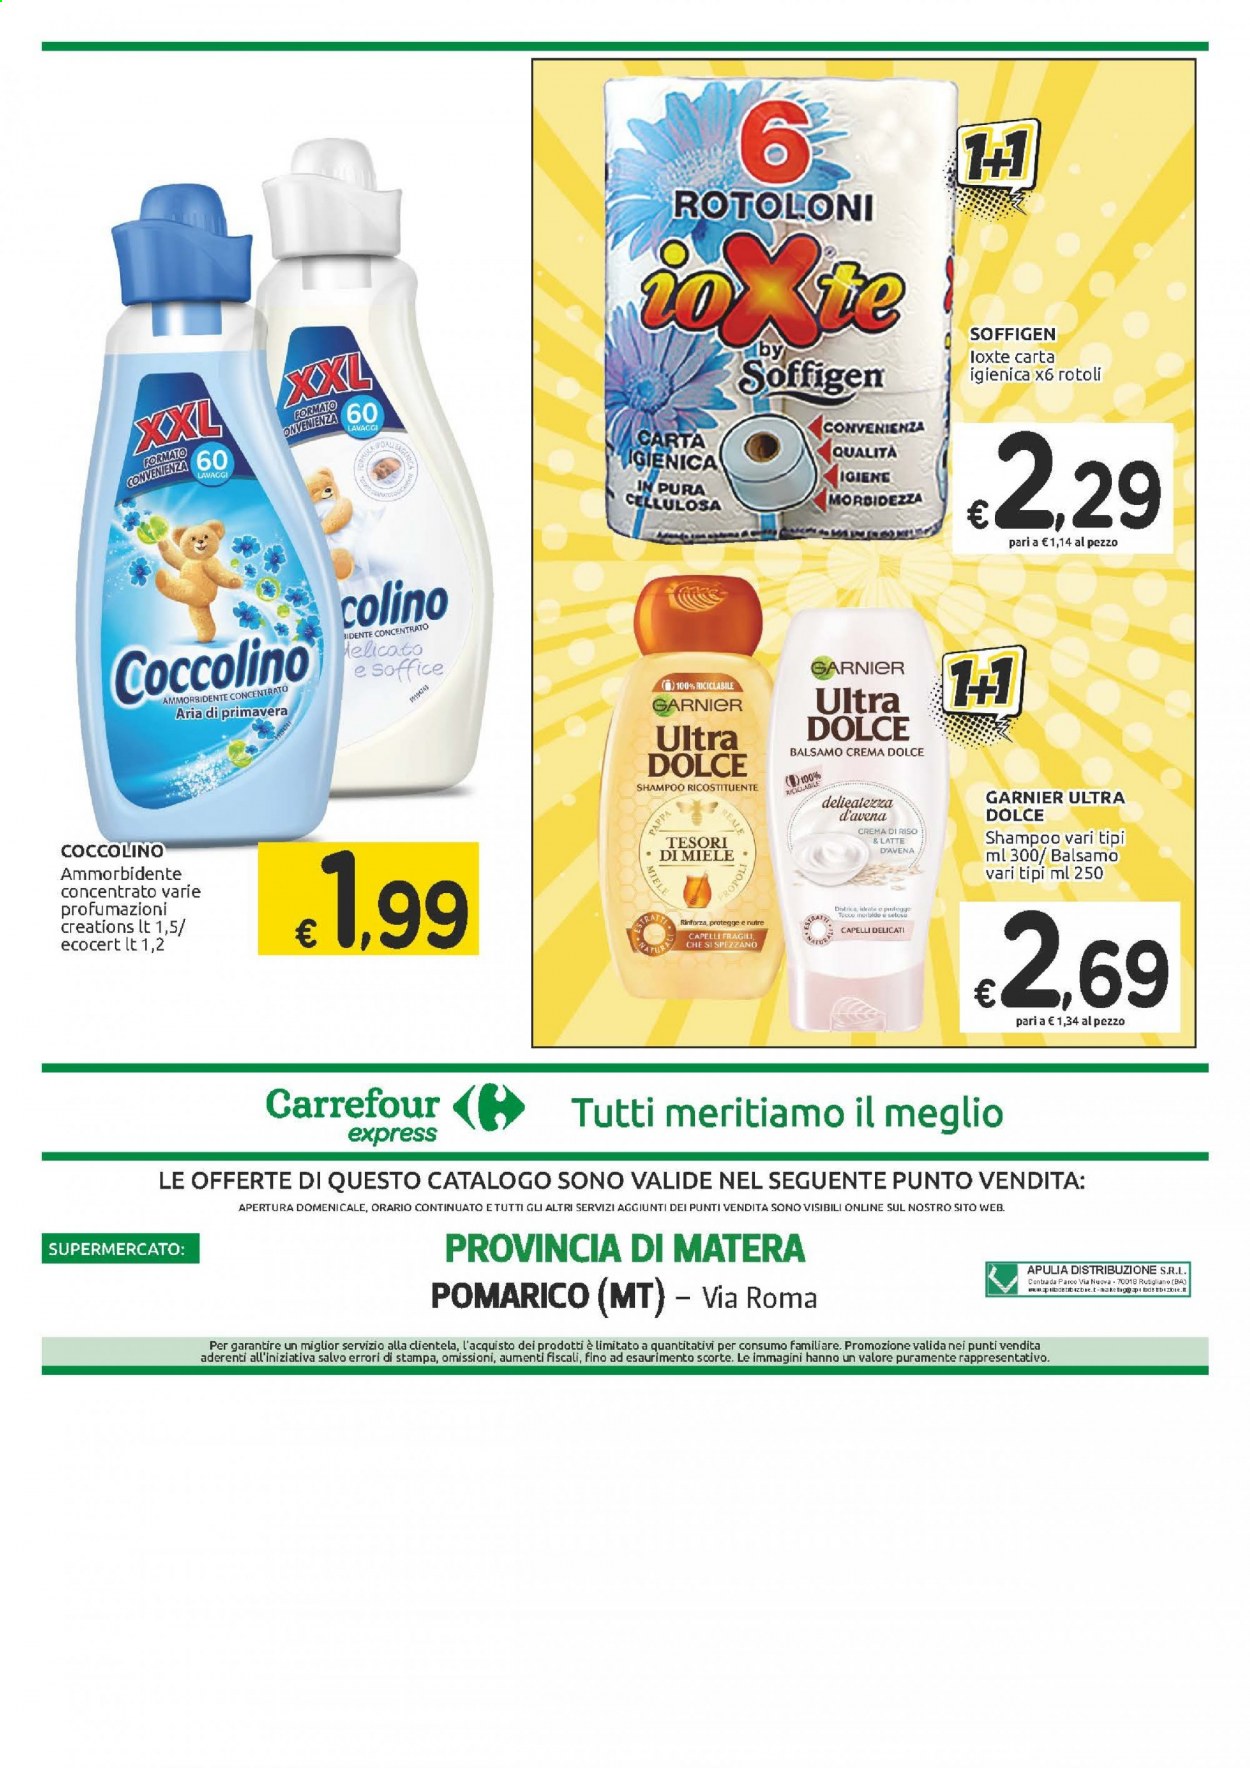 thumbnail - Volantino Carrefour - 7/4/2021 - 17/4/2021 - Prodotti in offerta - Garnier, carta igienica, ammorbidente, Ultra Dolce, shampoo. Pagina 8.